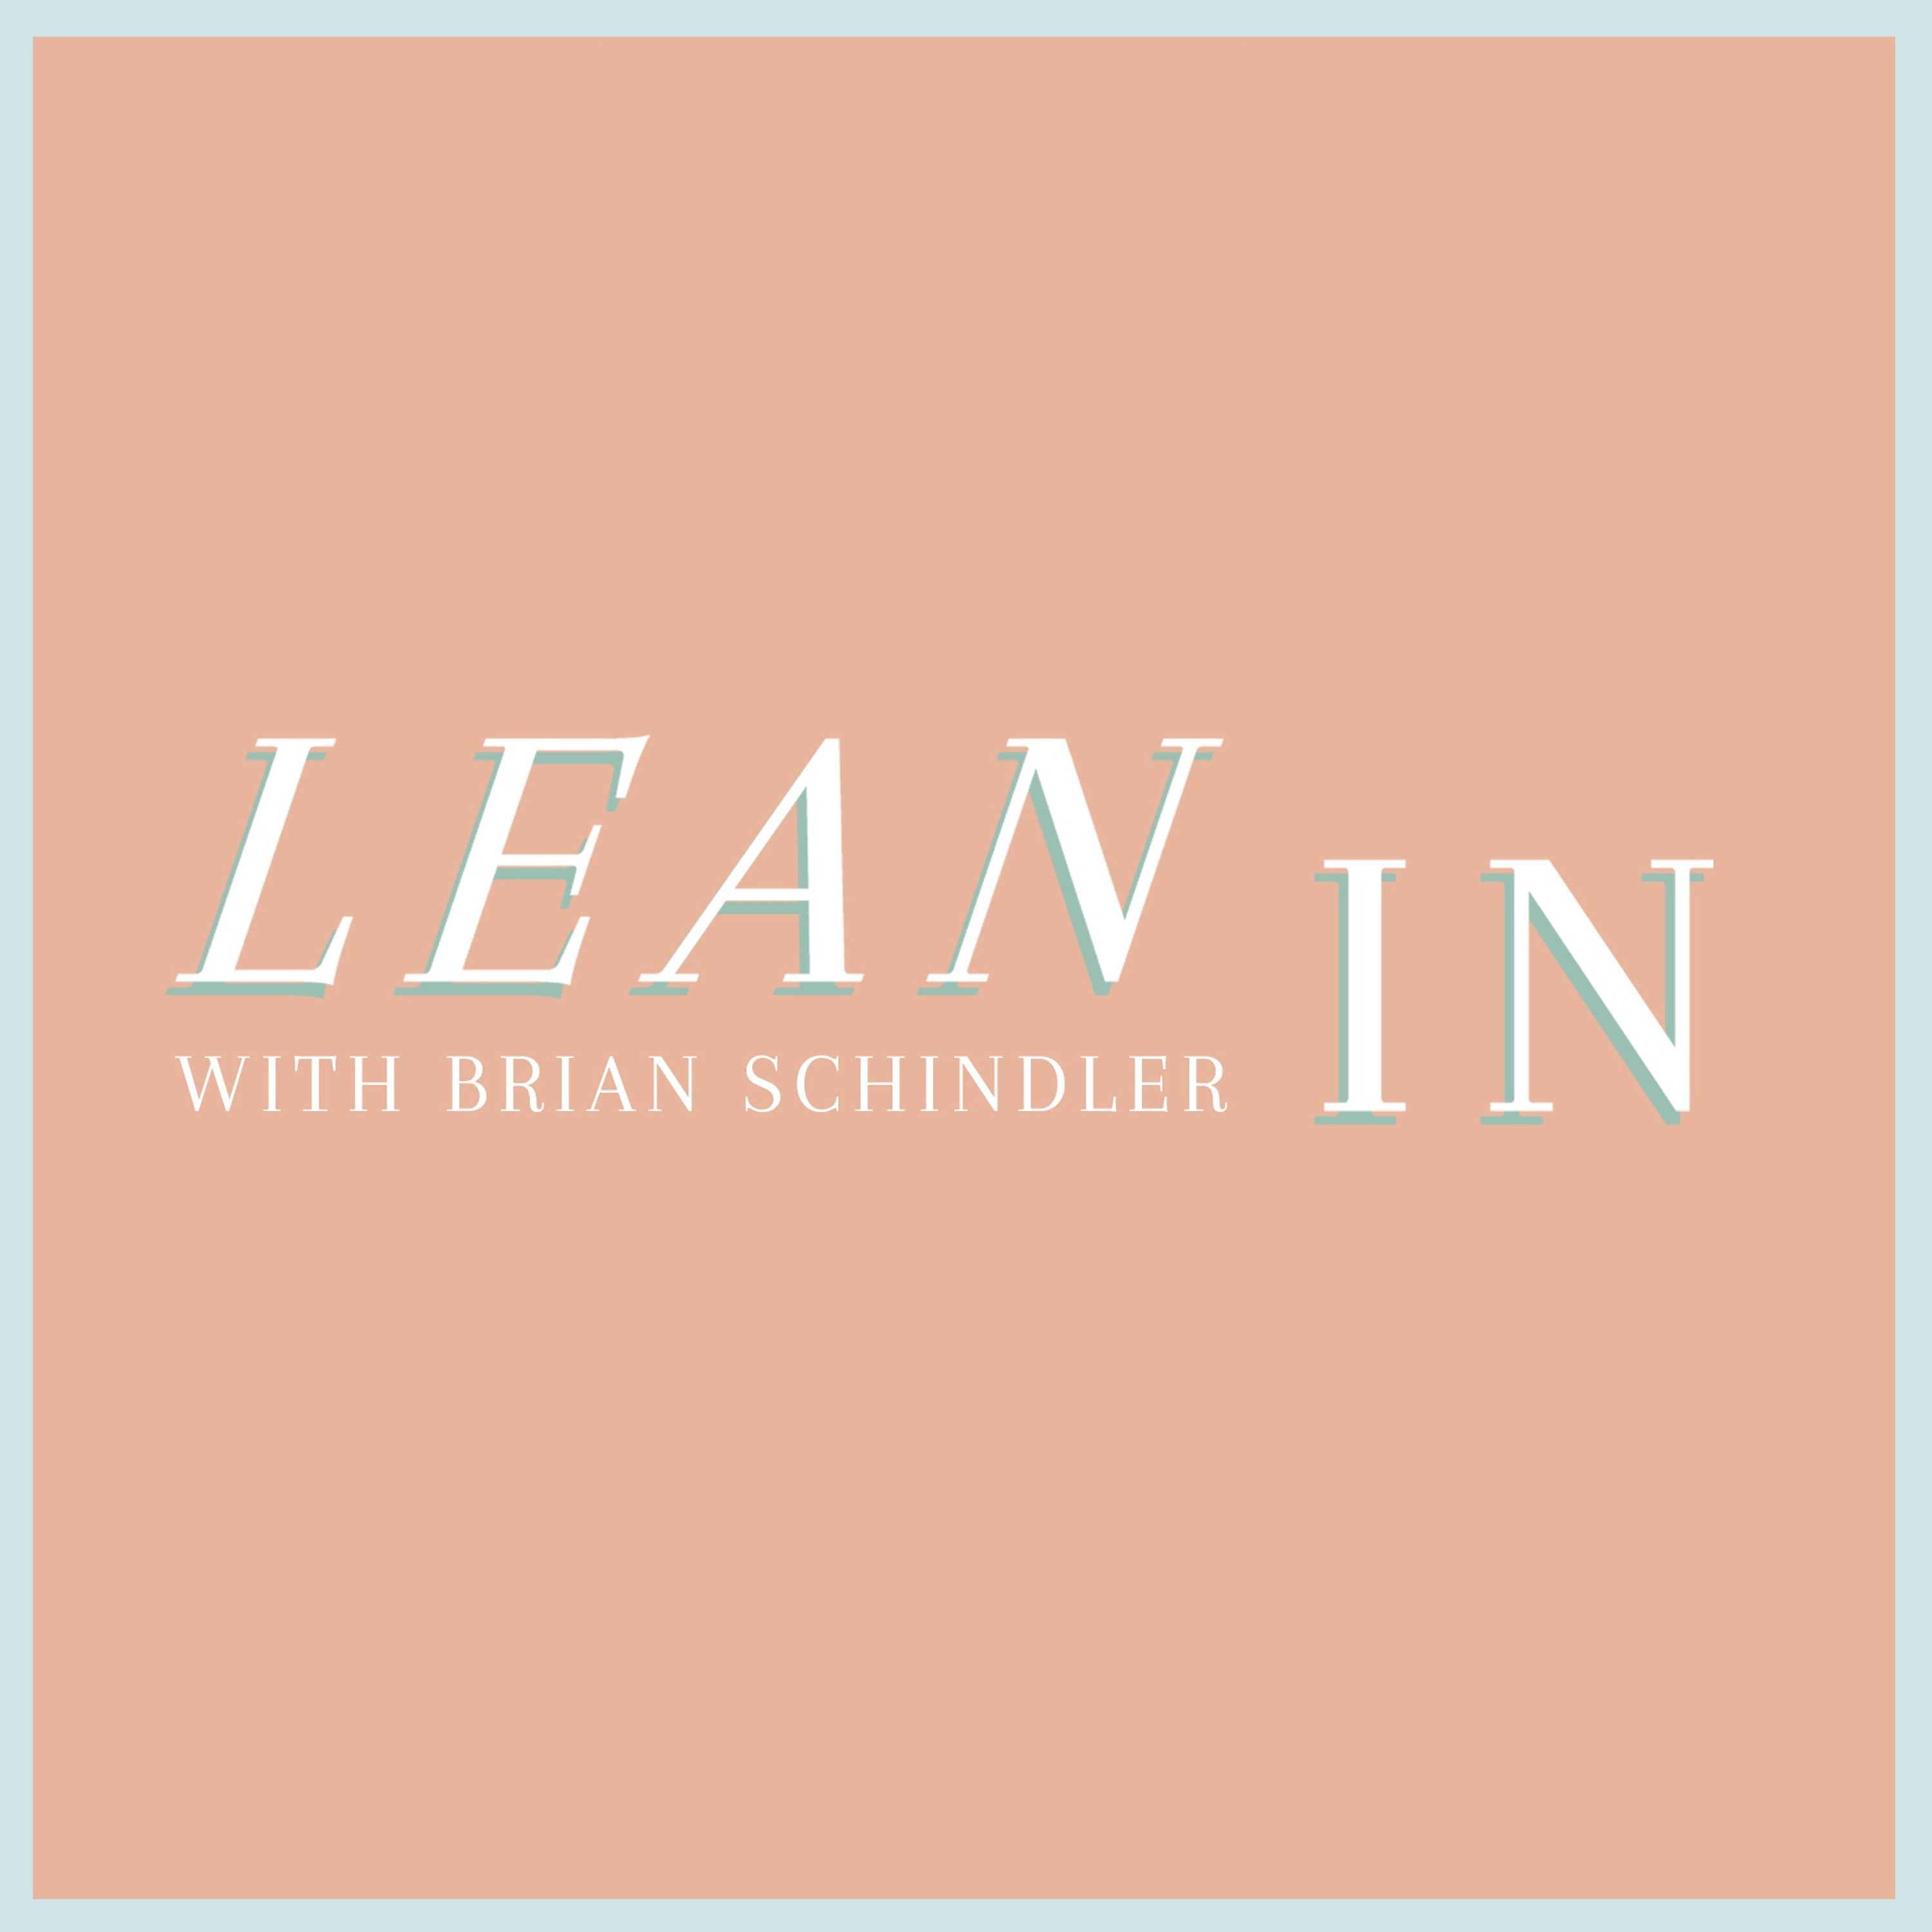 Lean In - Episode 008 - Joy in our Broken - Brian Schindler with Taylor Tippett